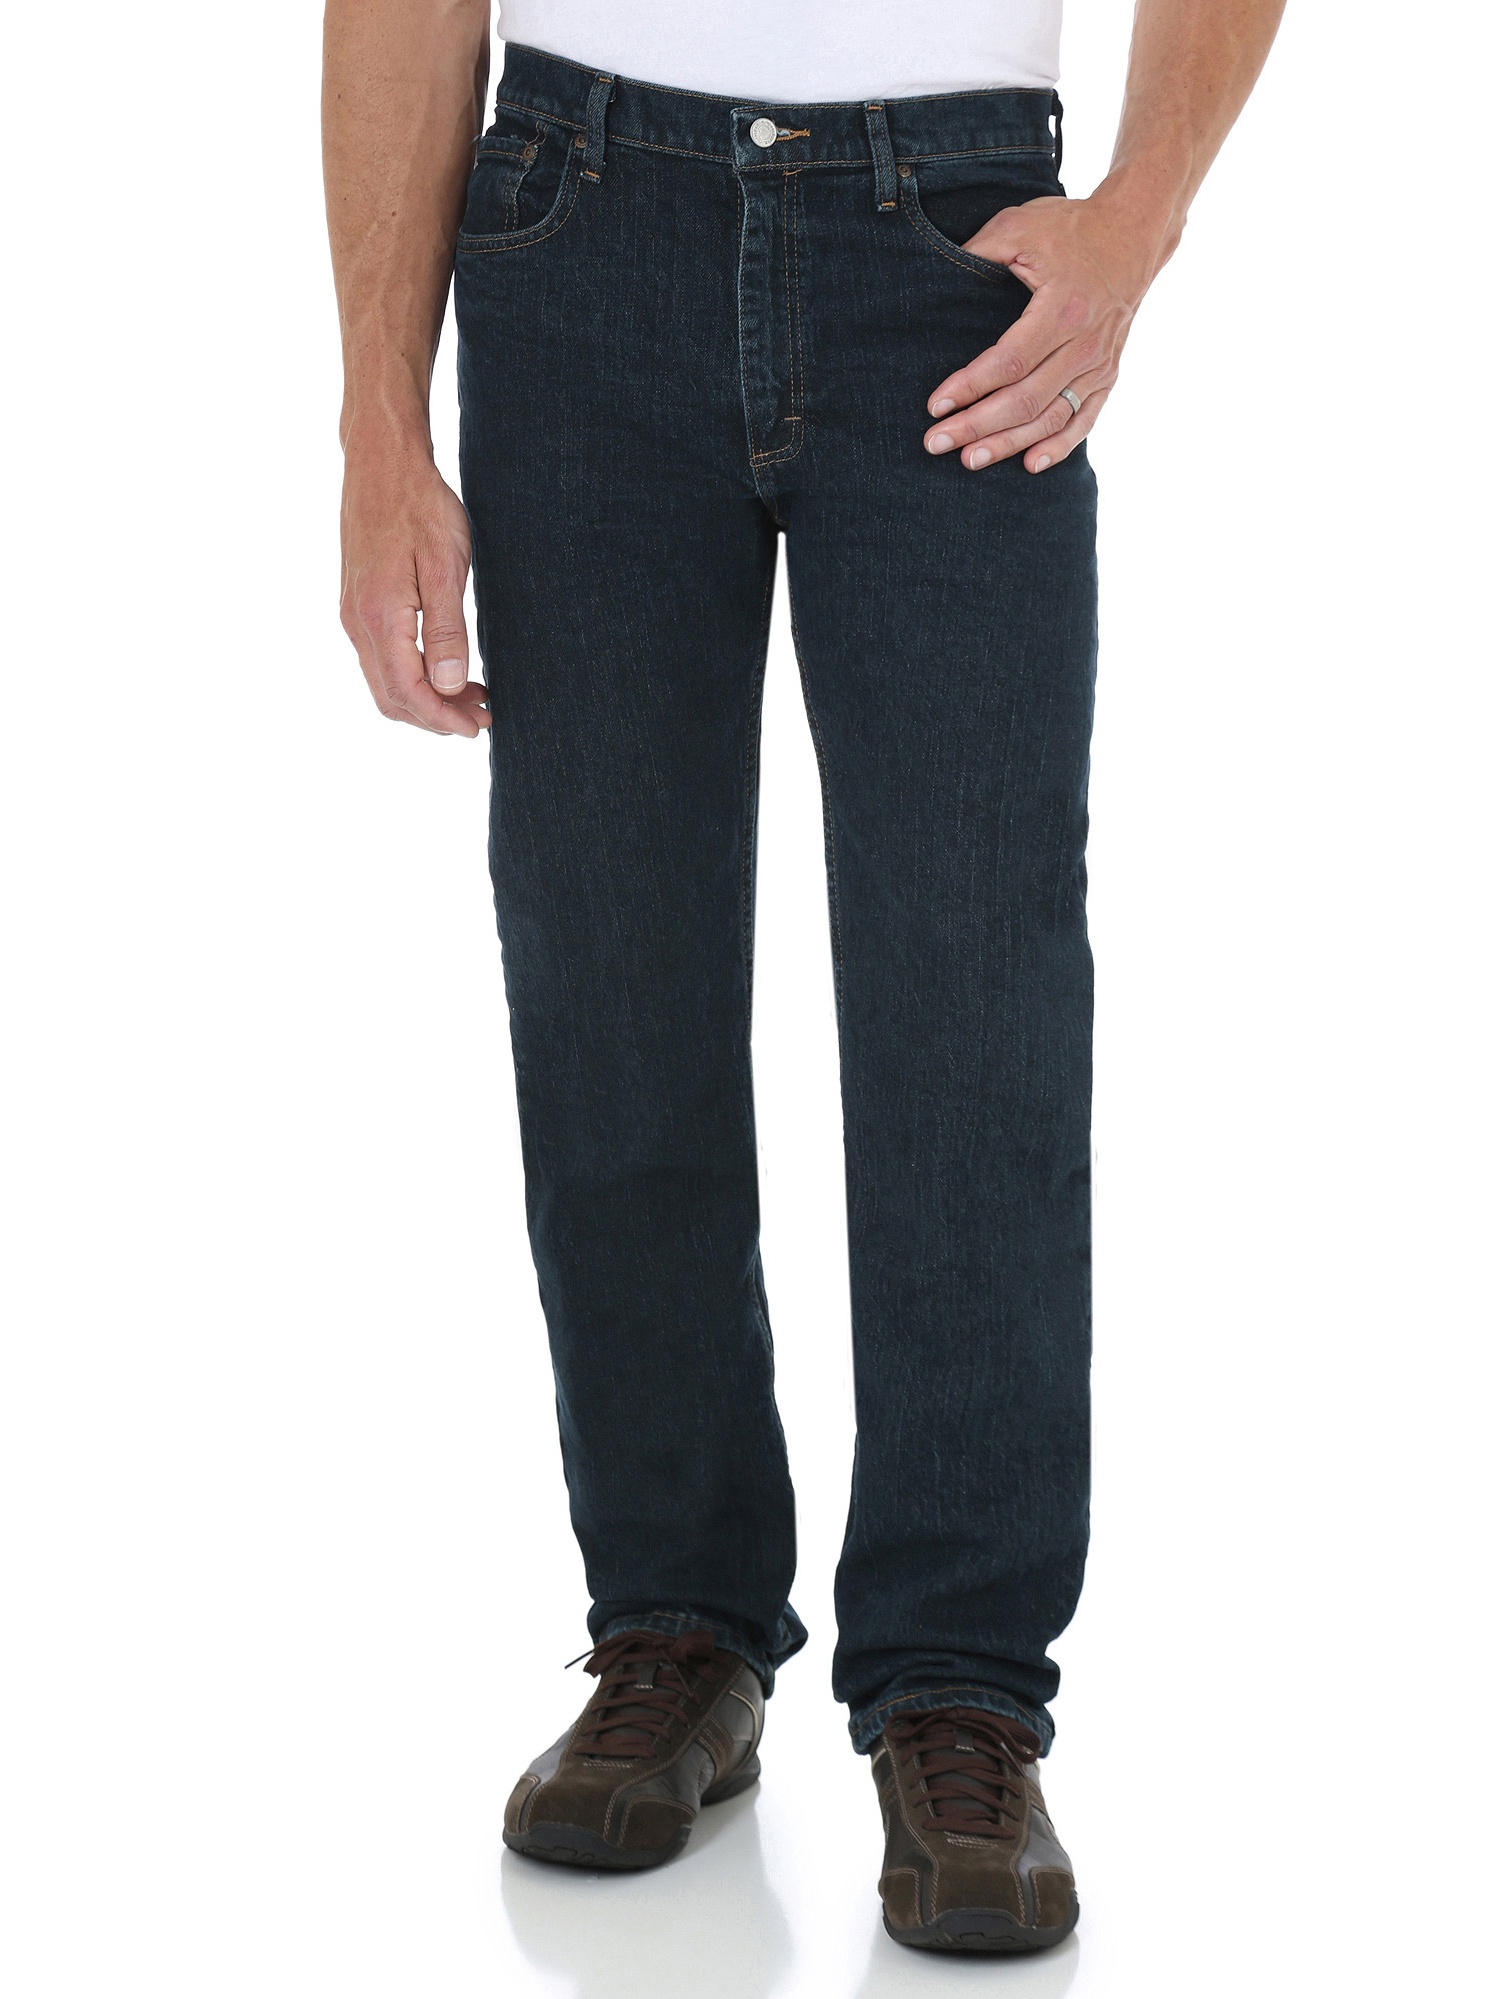 Men's Advanced Comfort Regular Fit Jean - image 1 of 2